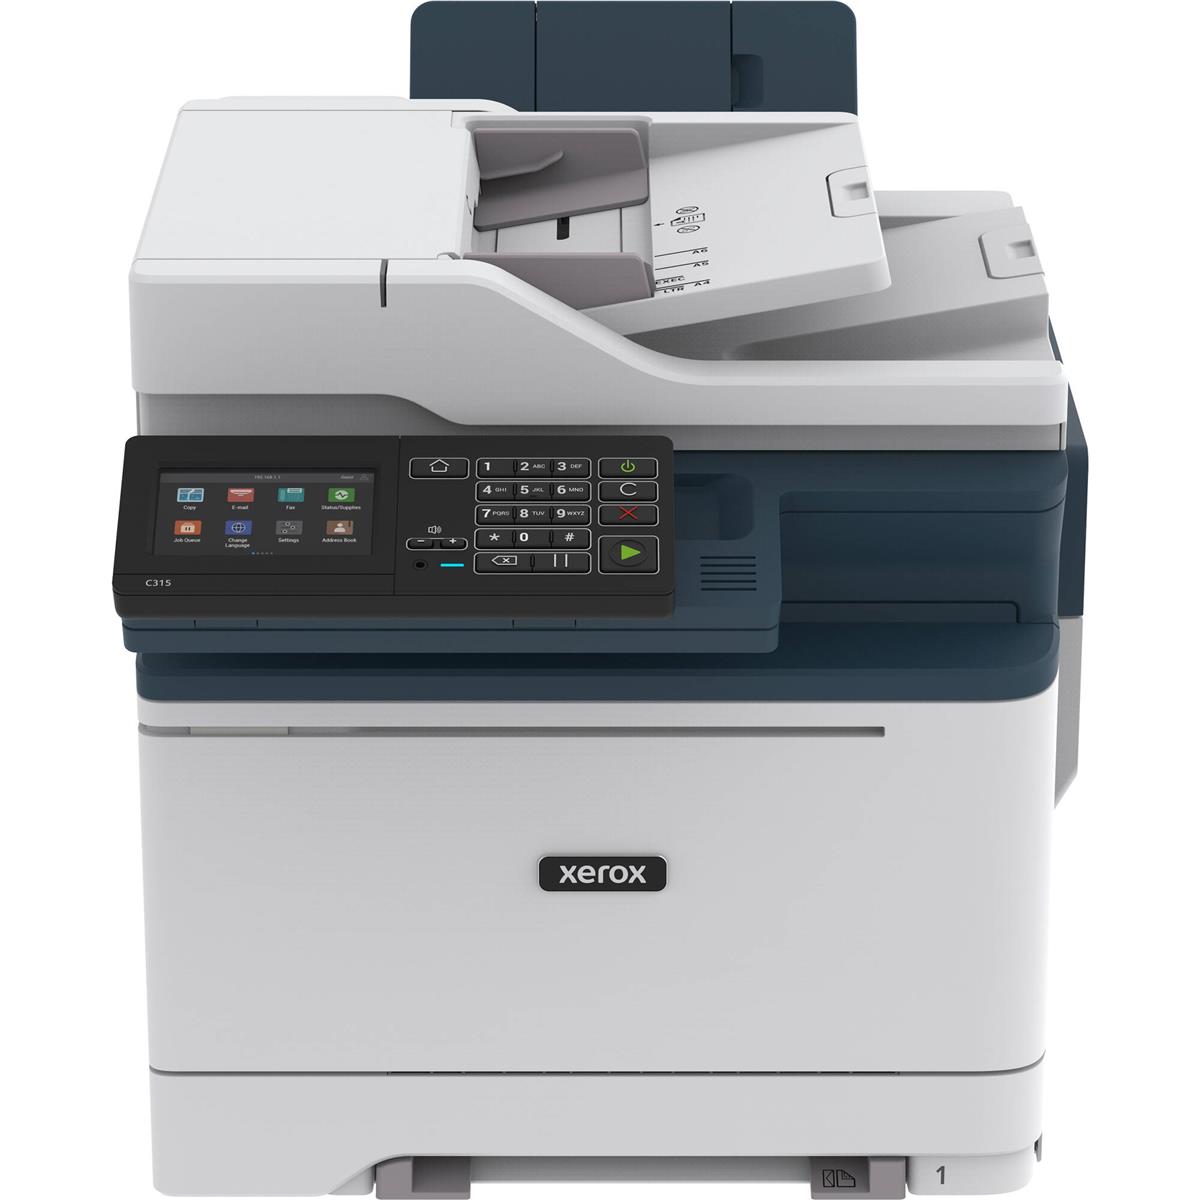 

Xerox C315 Wireless Duplex Multifunction Color Laser Printer